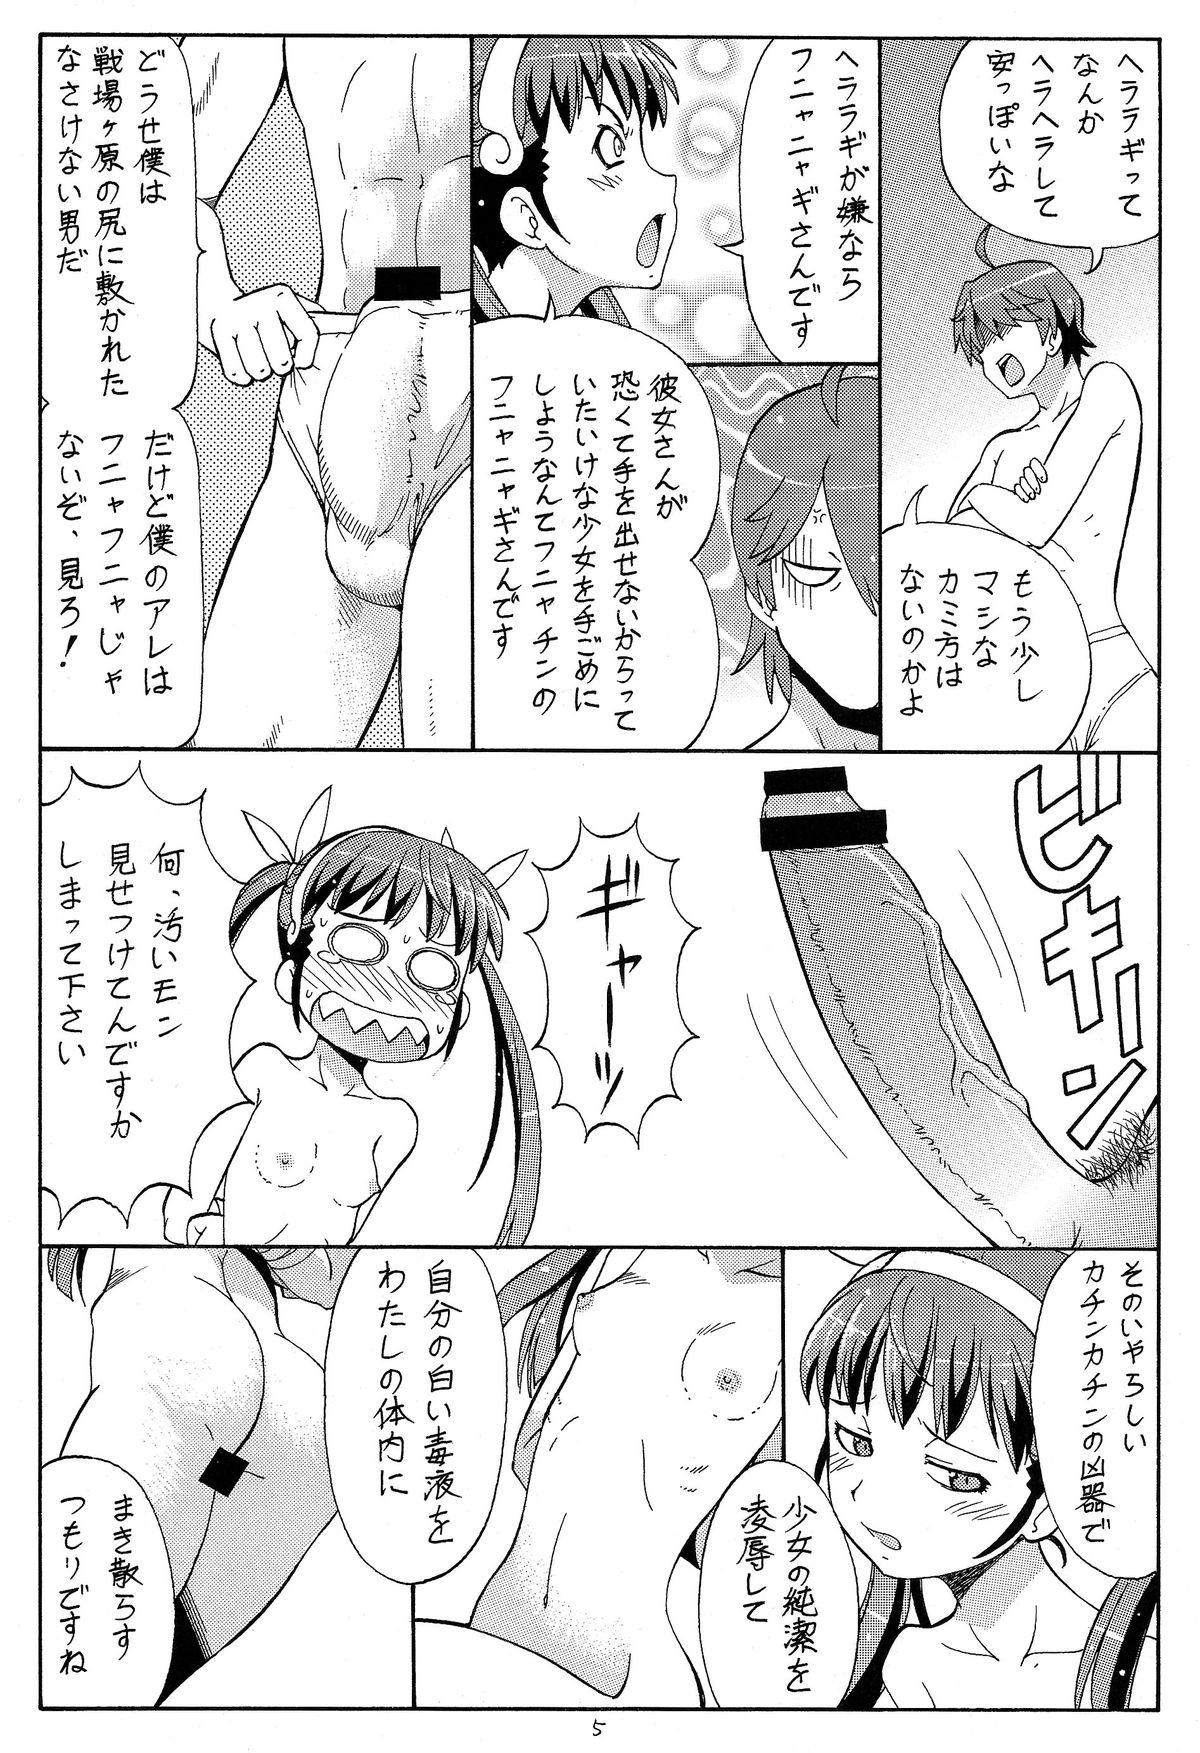 Exhibitionist Hito ni Hakanai to Kaite "Araragi" to Yomu 4 - Bakemonogatari Ass Licking - Page 7